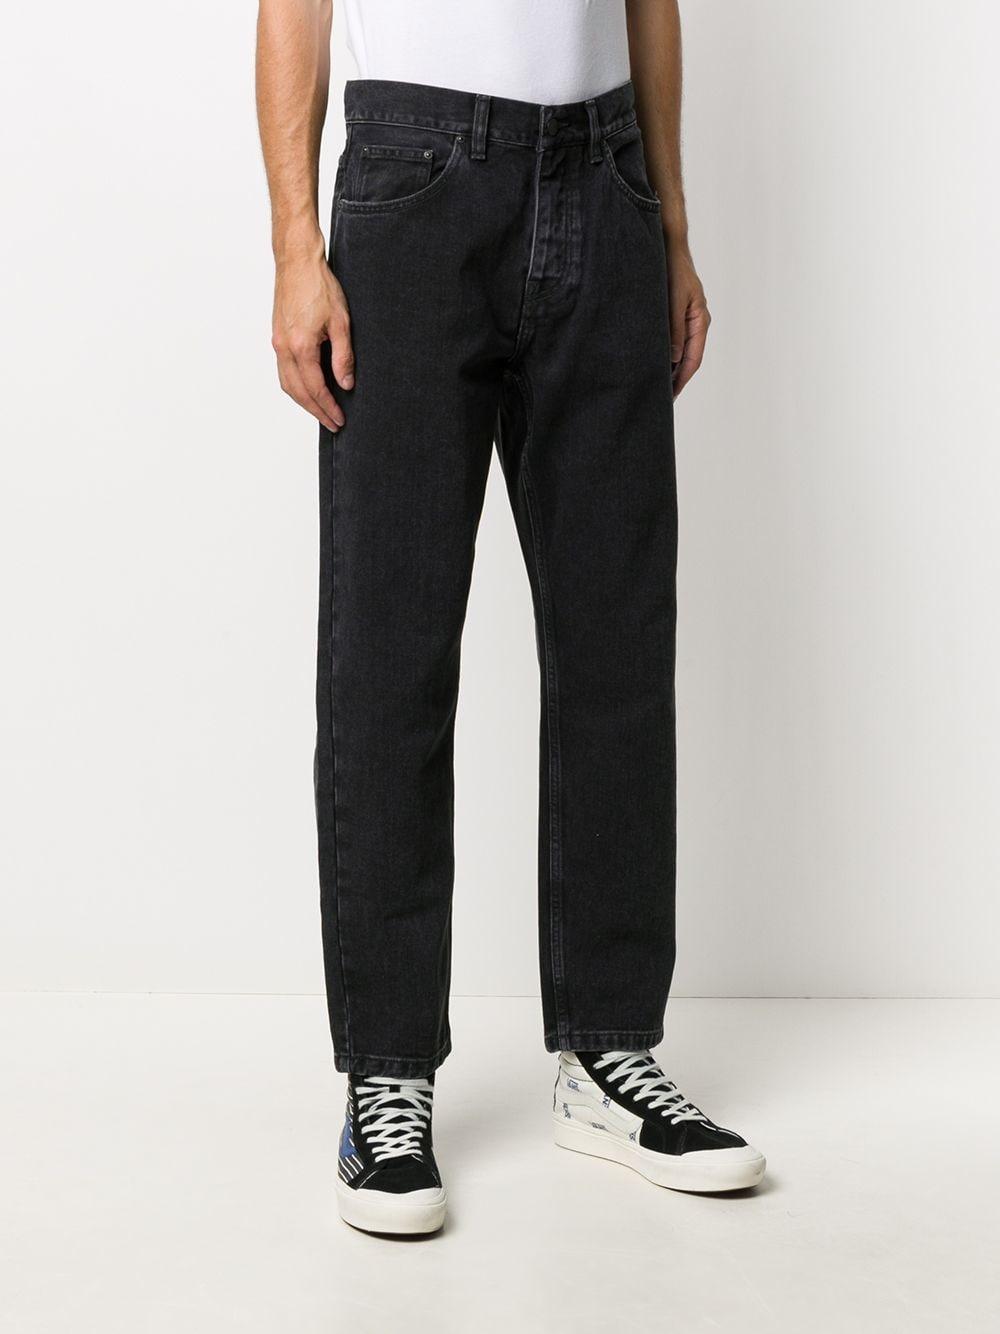 Carhartt WIP Denim High-rise Loose Fit Jeans in Black for Men - Lyst